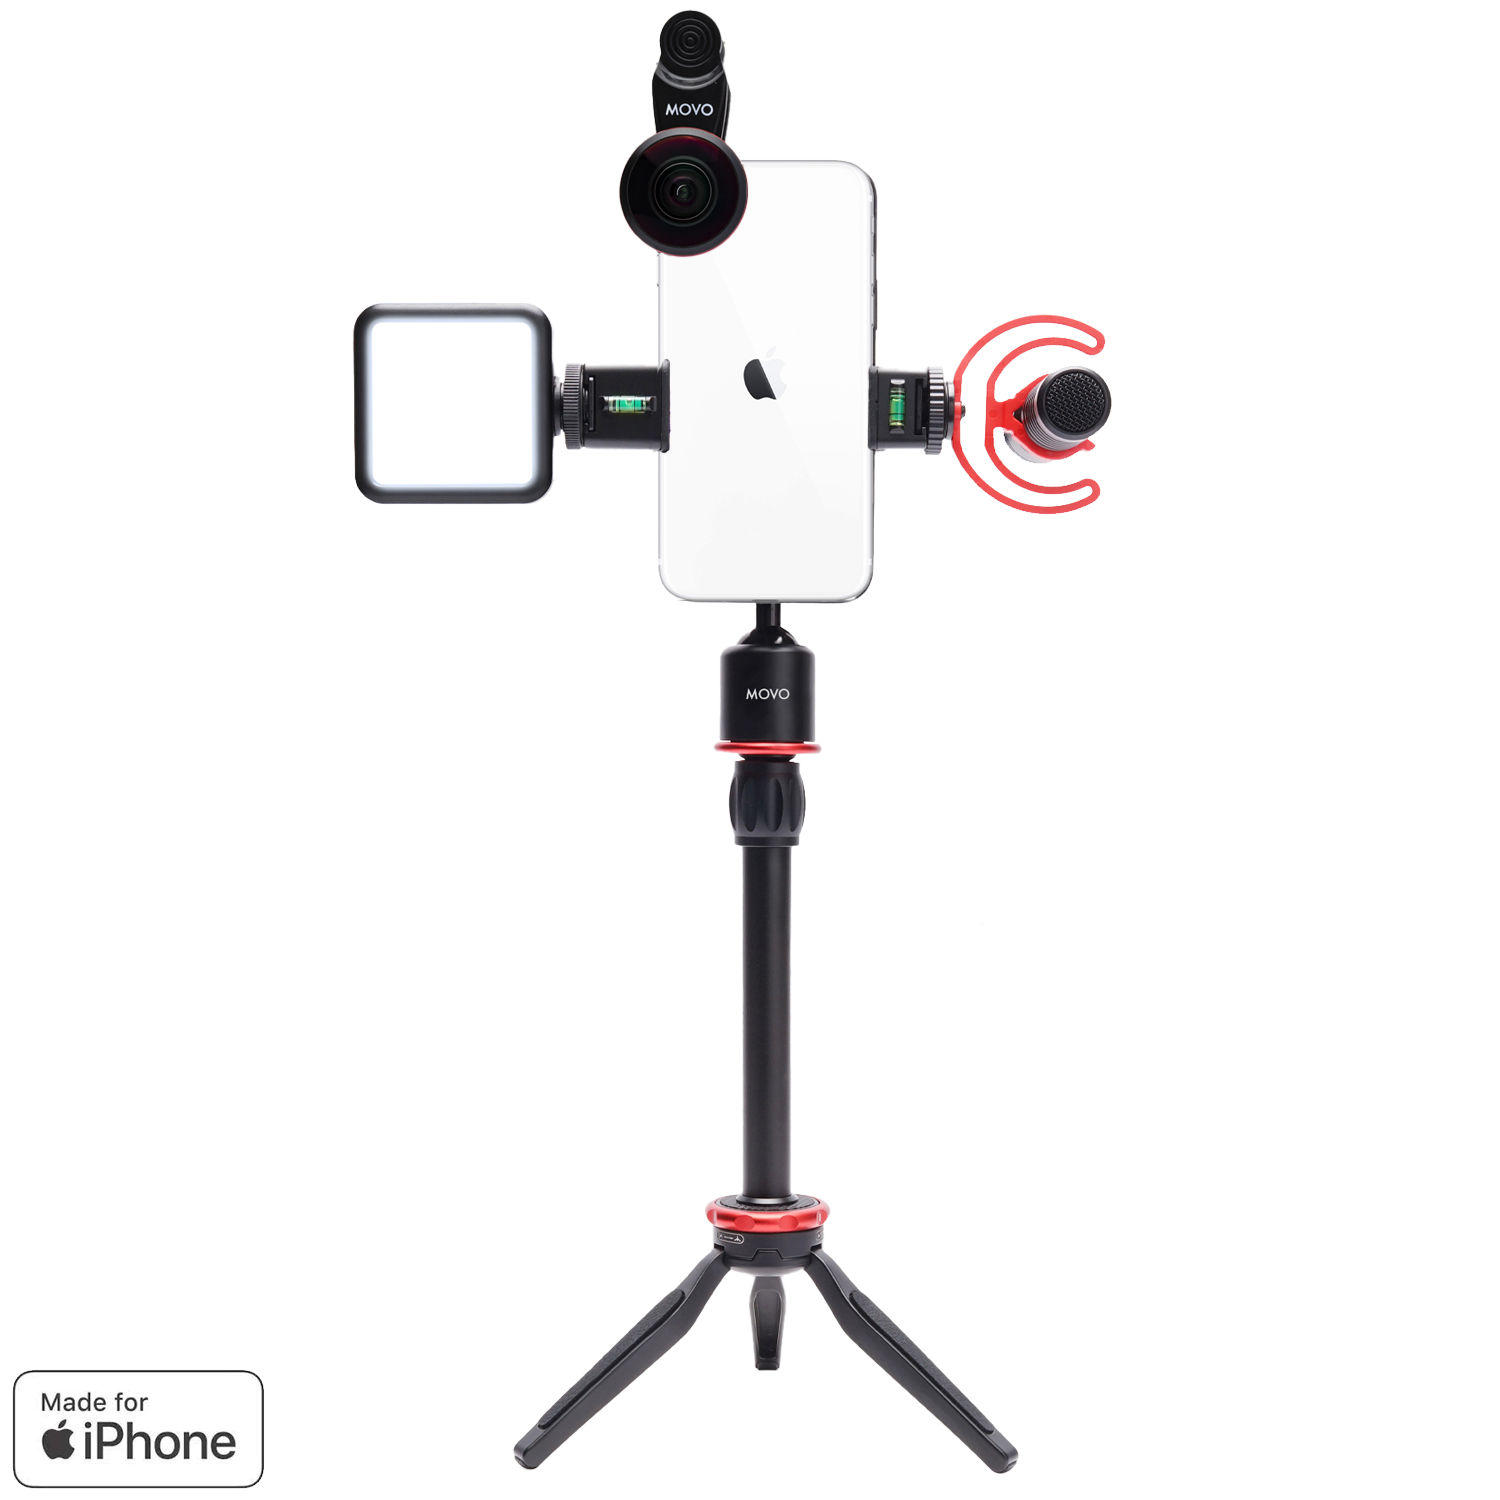 iVlog1, Vlogging Kit for iPhone w/ Tripod & More